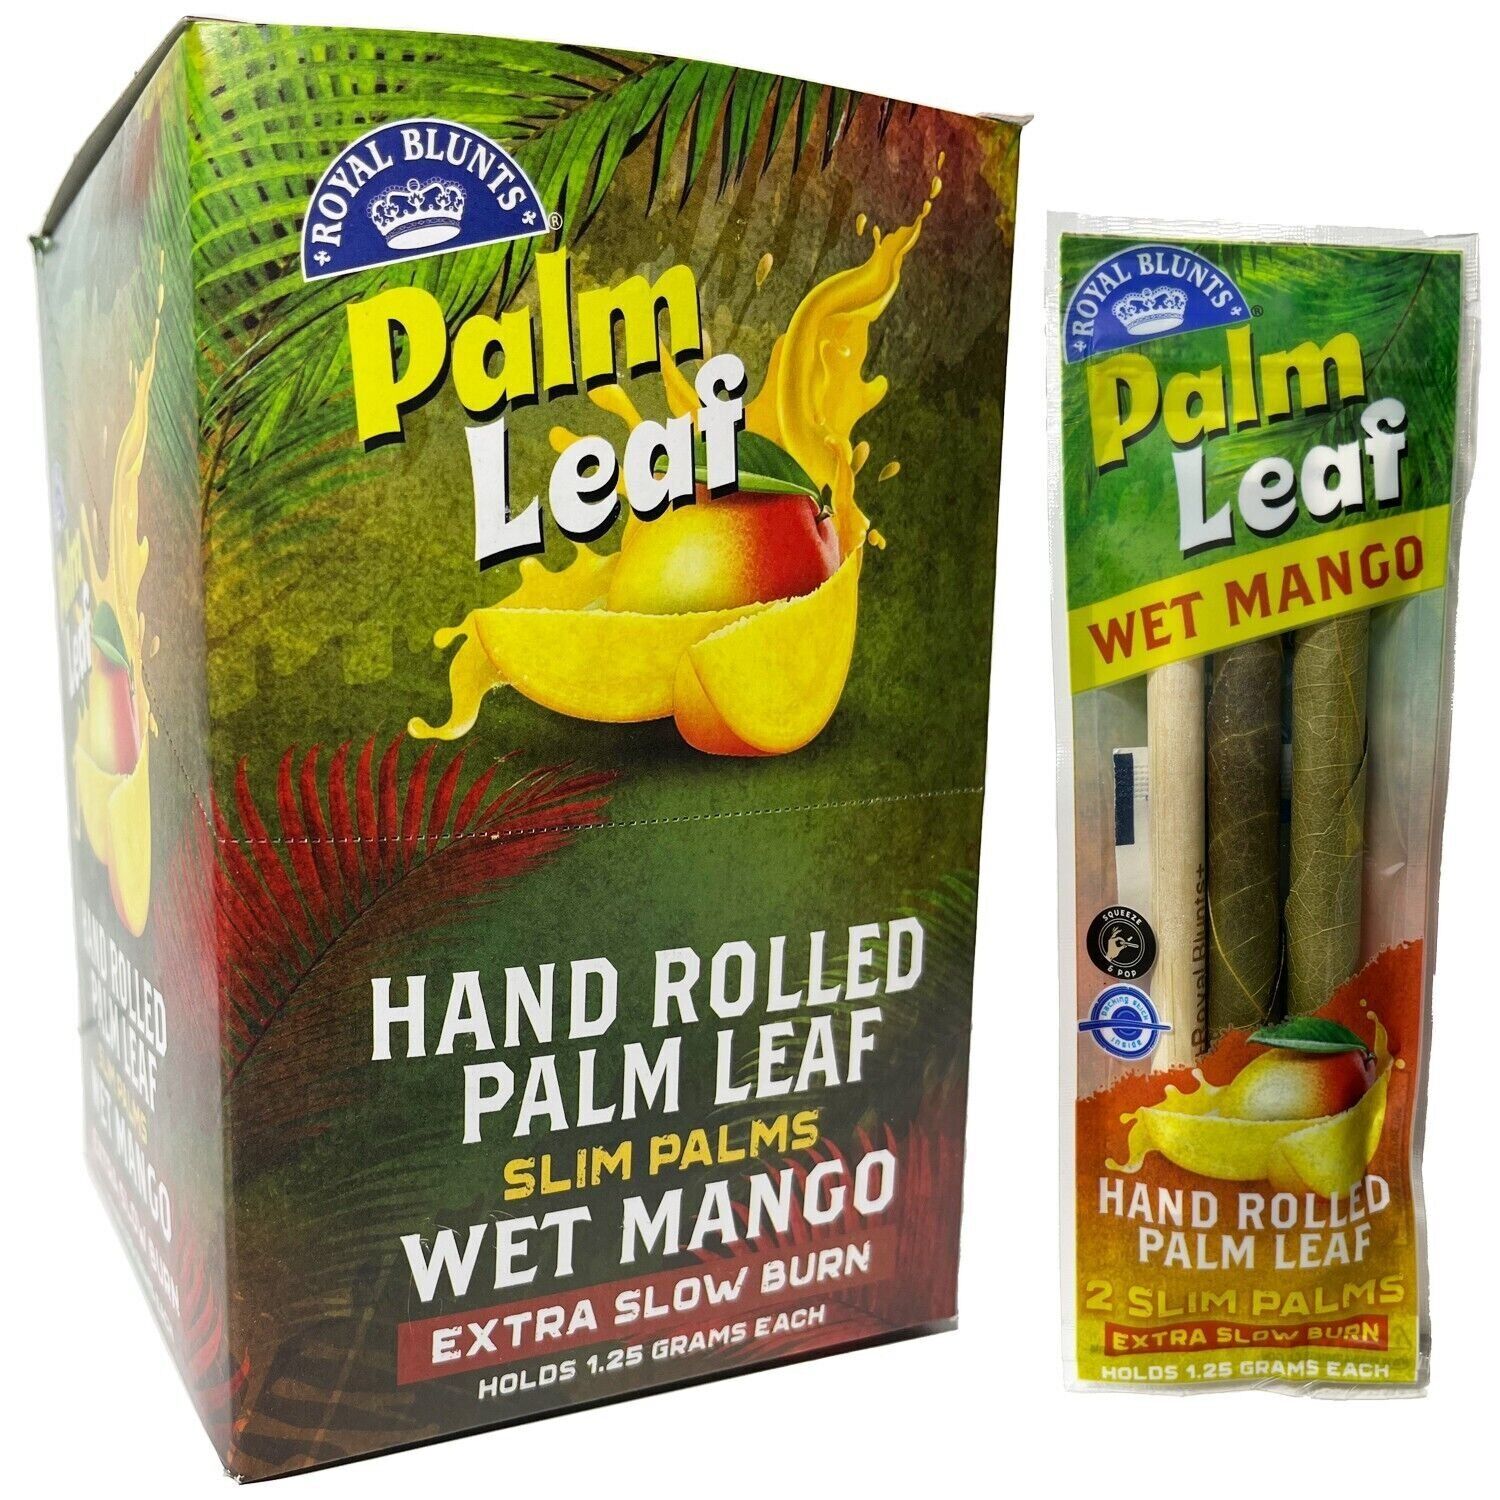 Royal B - Slim Palms -  Hand Rolled Palm Leafs - Wet Mango (Box of 24)